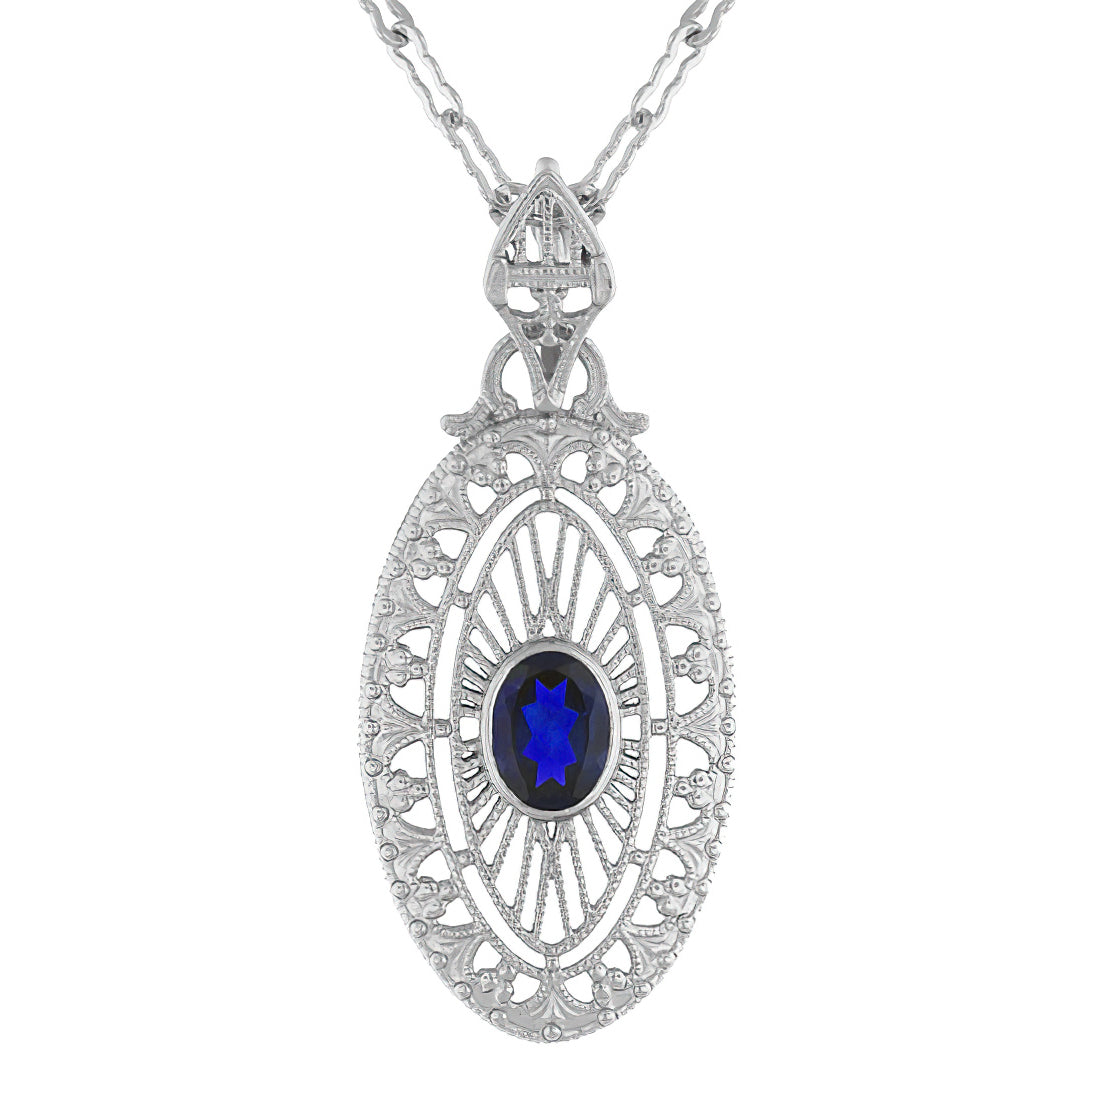 Frank Lloyd Wright Art Deco silver necklace | “It is a gift for my dearest  friend.”